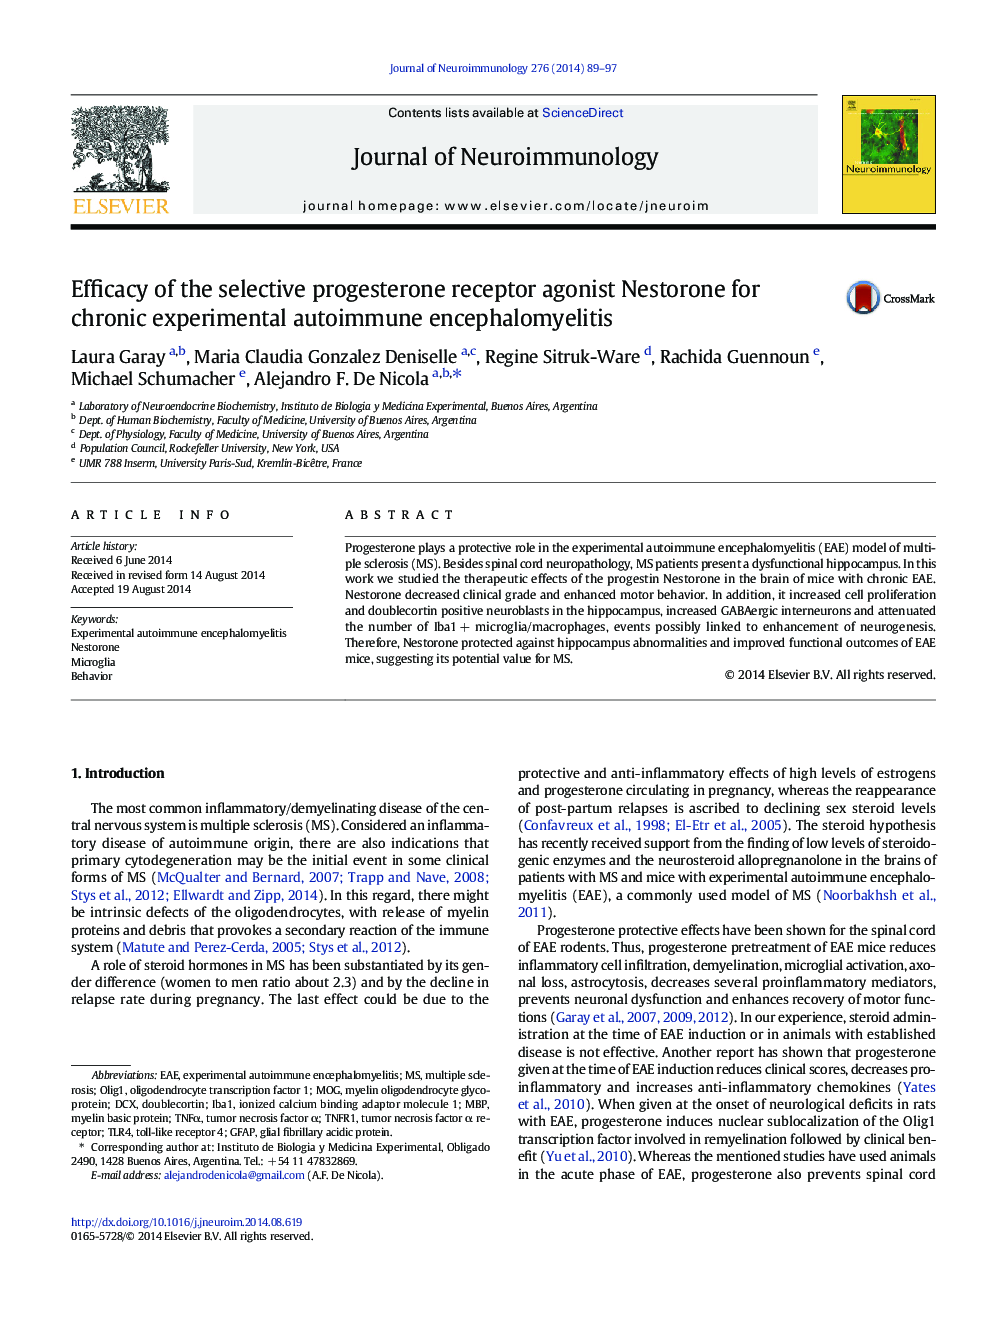 Efficacy of the selective progesterone receptor agonist Nestorone for chronic experimental autoimmune encephalomyelitis